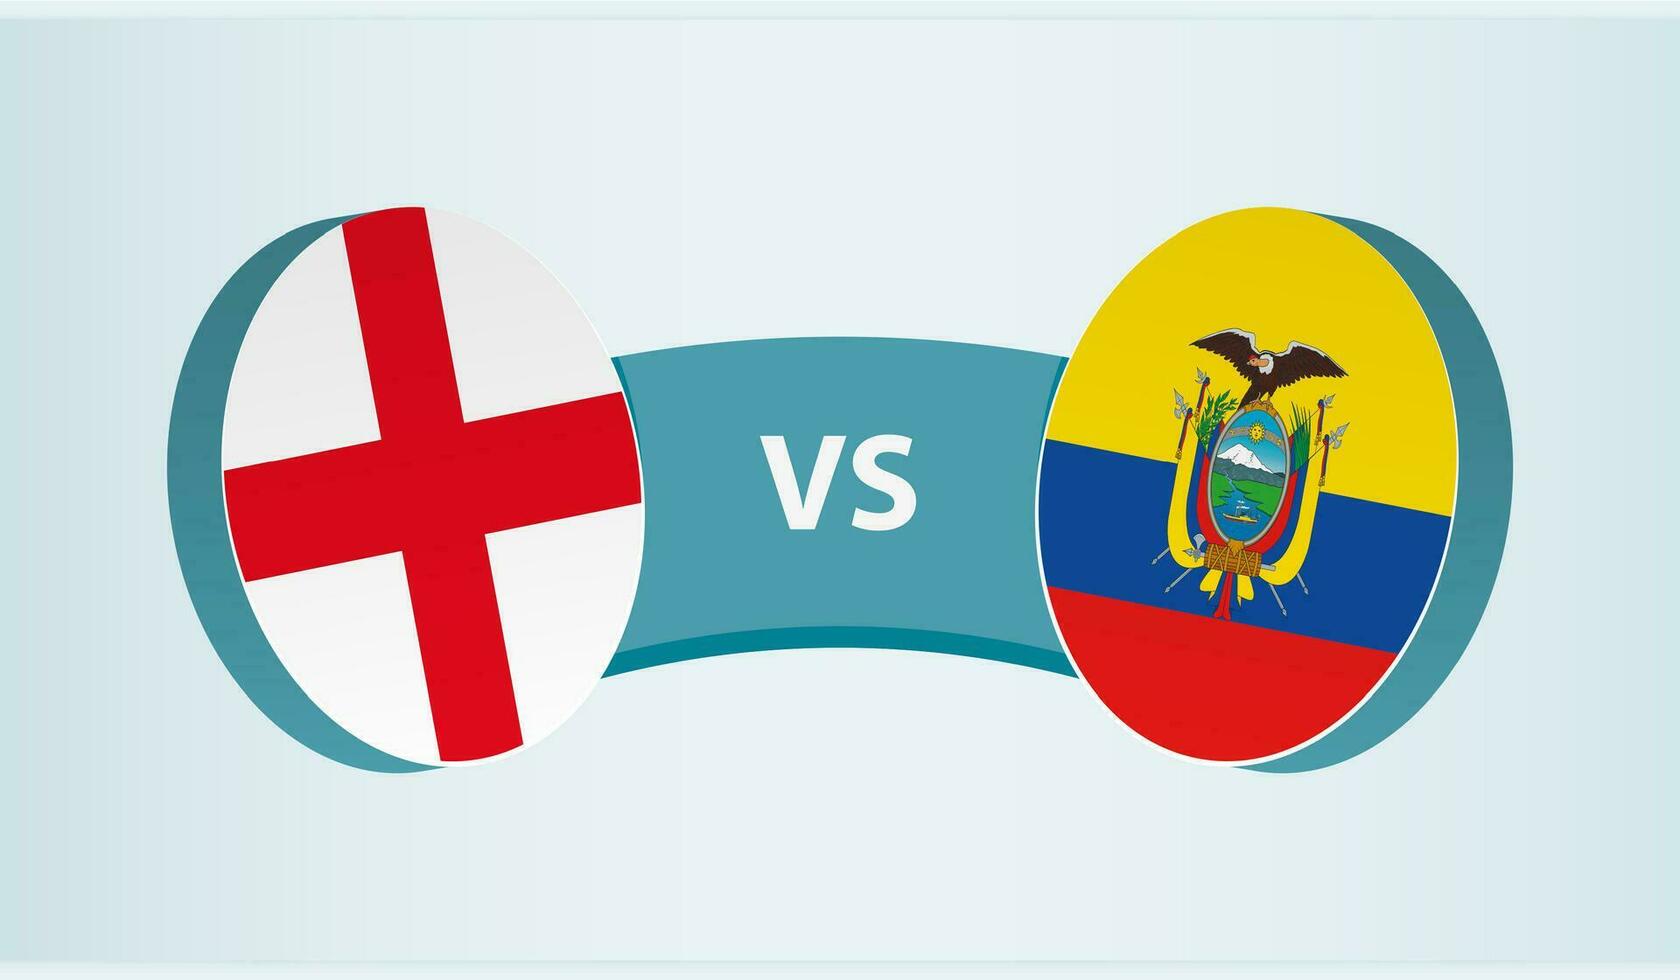 England versus Ecuador, team sports competition concept. vector